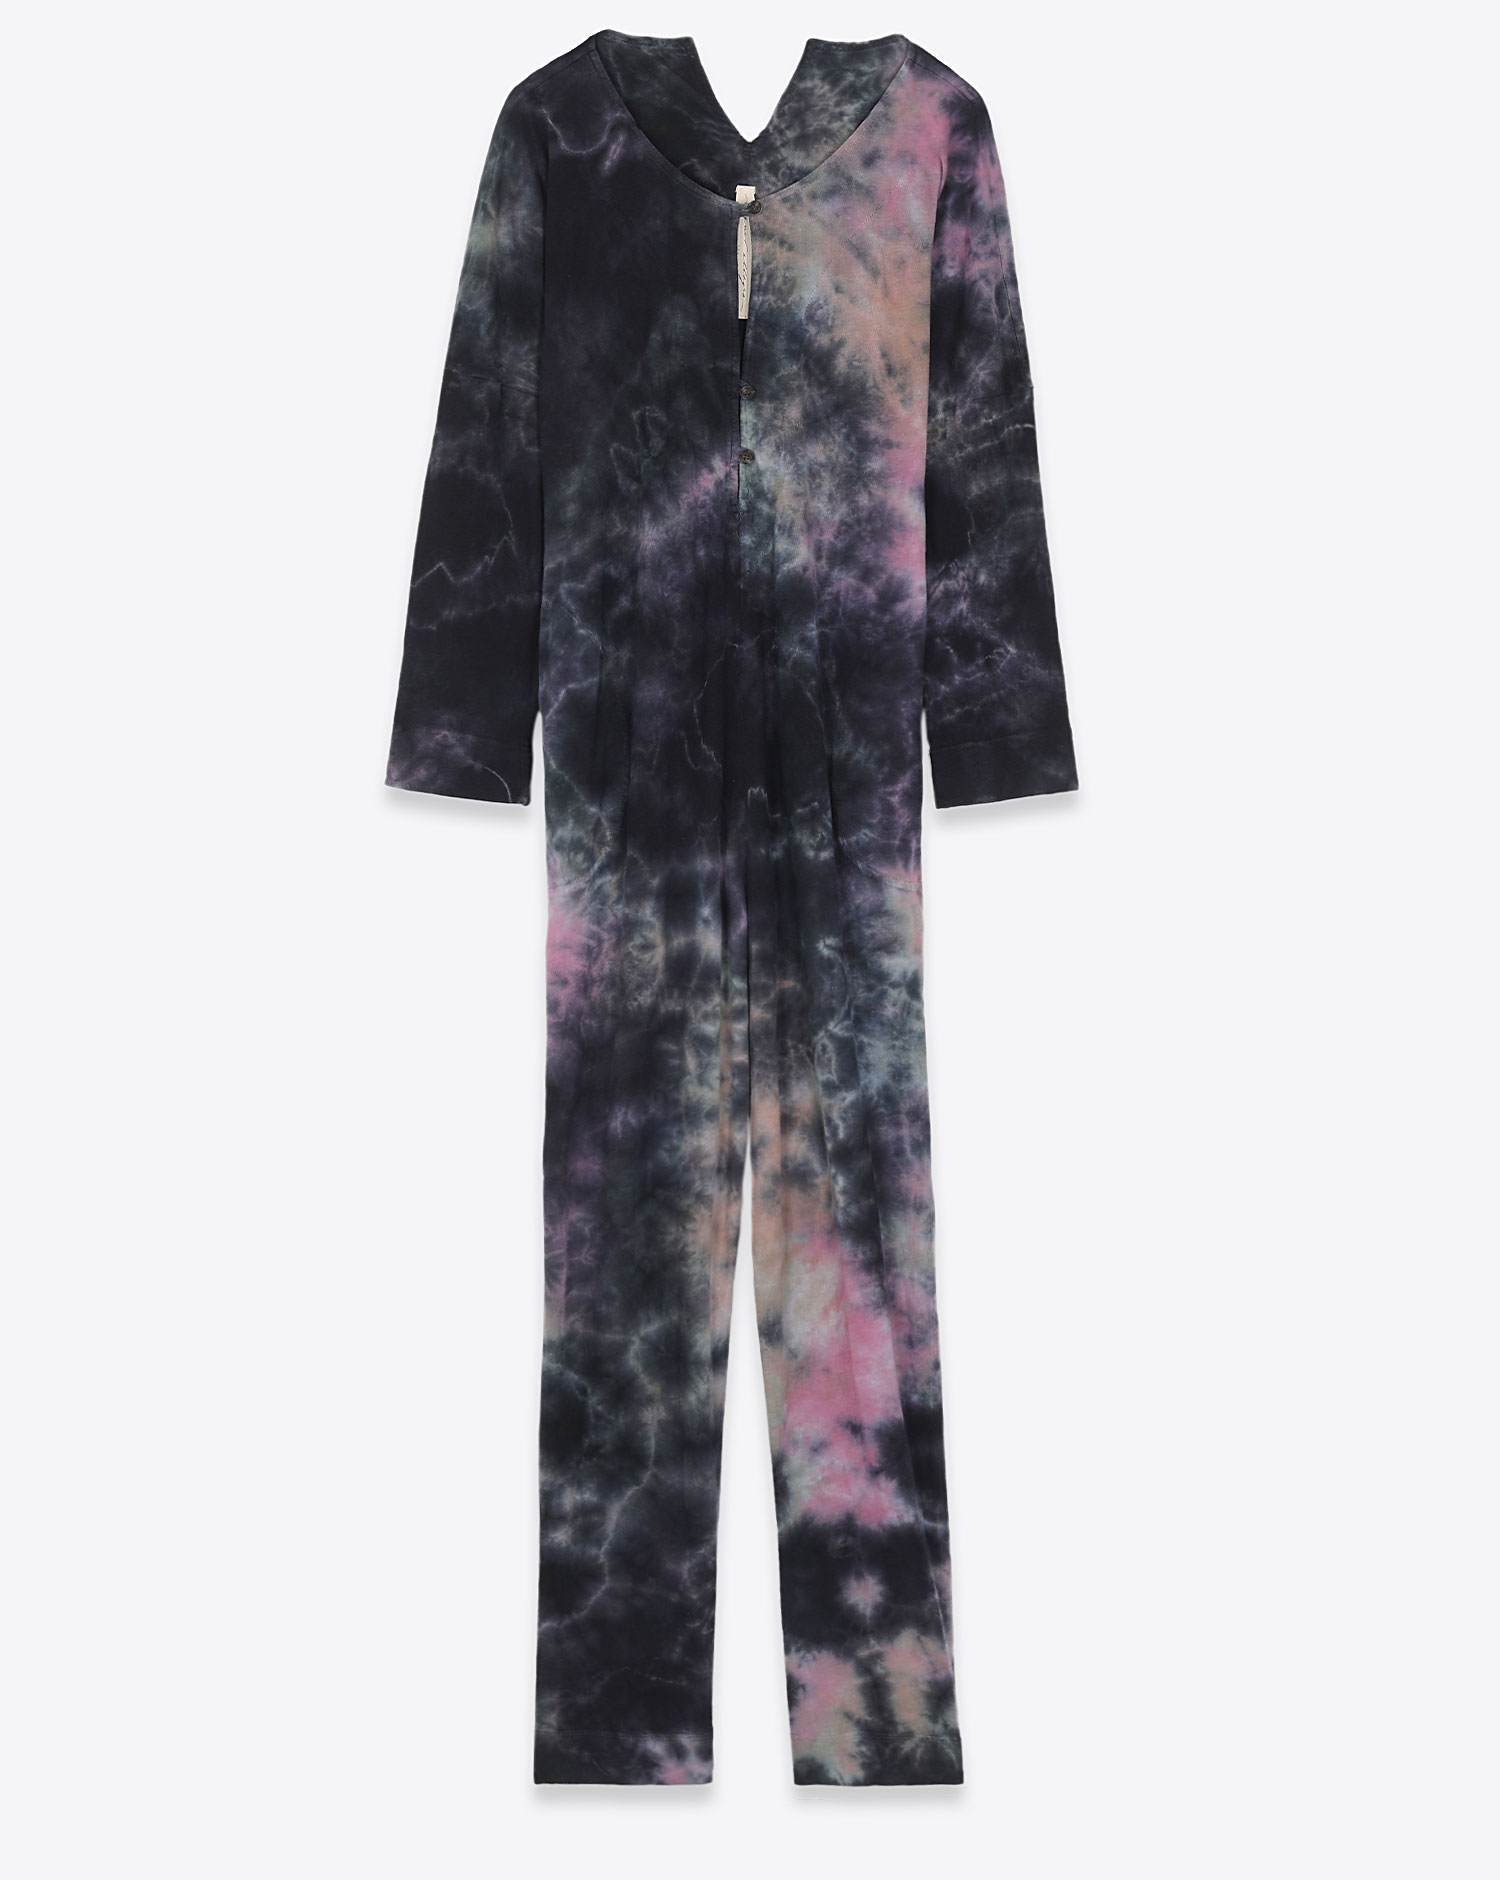 Combinaison Flight Suit Nebula Raquel Allegra Tie and Dye. 